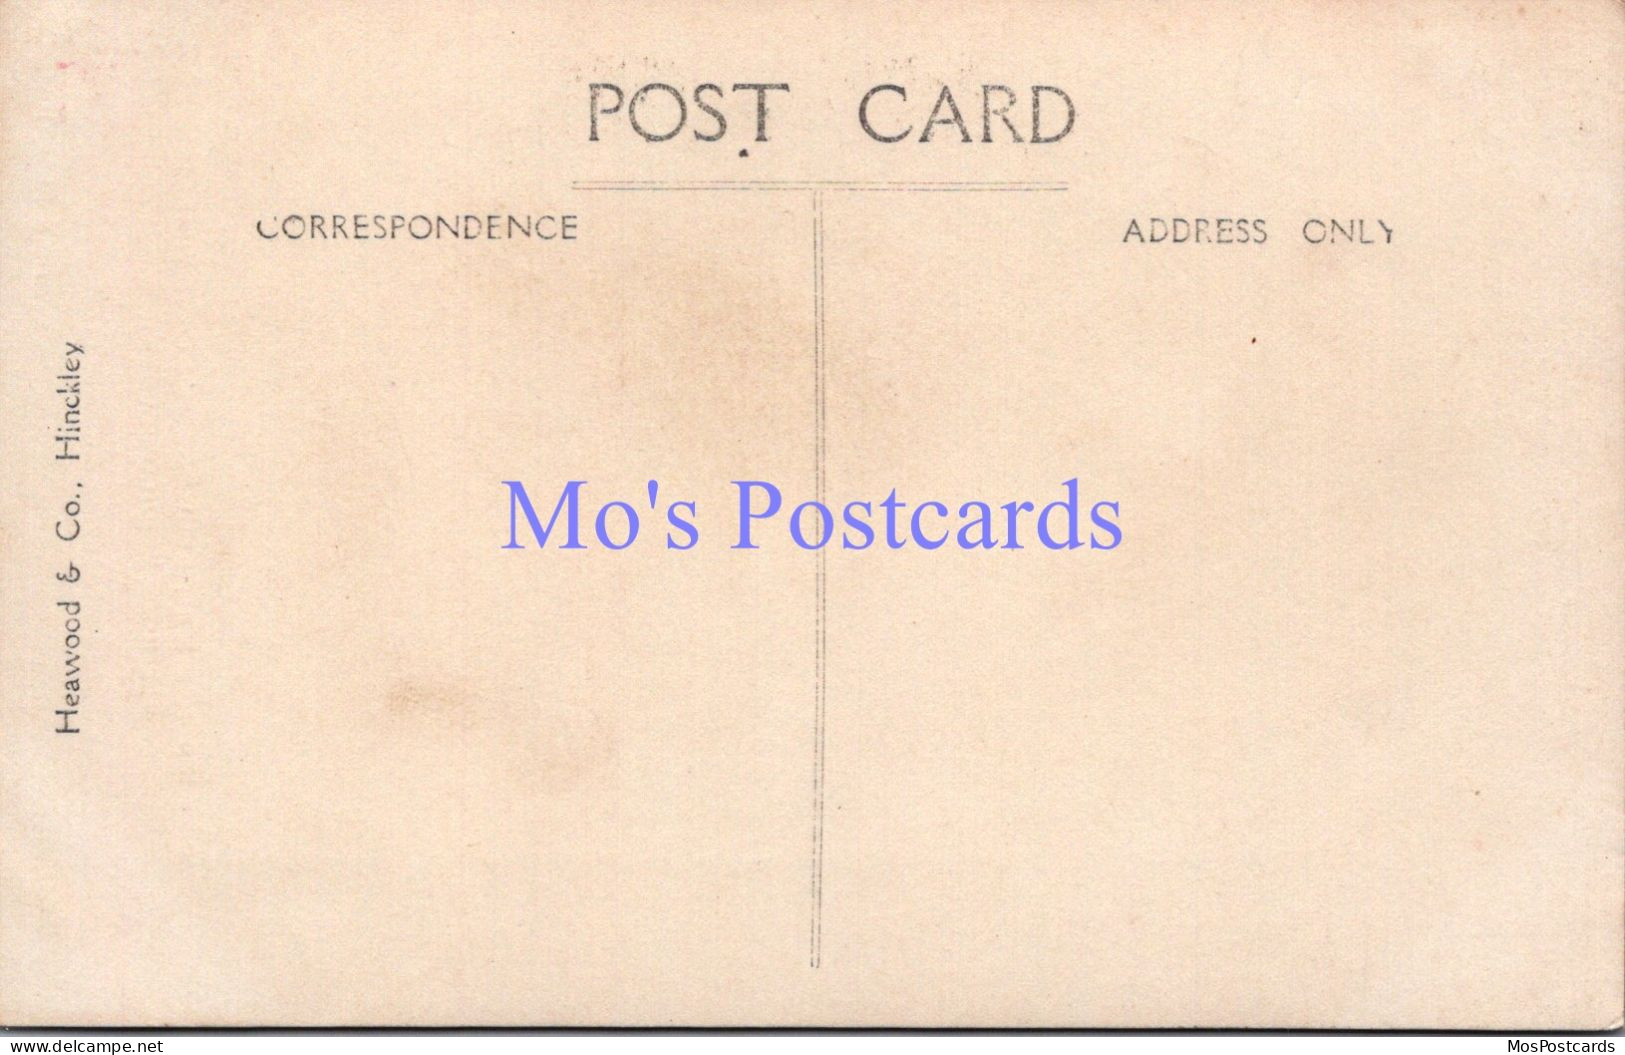 Wedding Postcard - Mr & Mrs Edgar Davis, Hinckley, July 14th 1914 -  DZ97 - Huwelijken